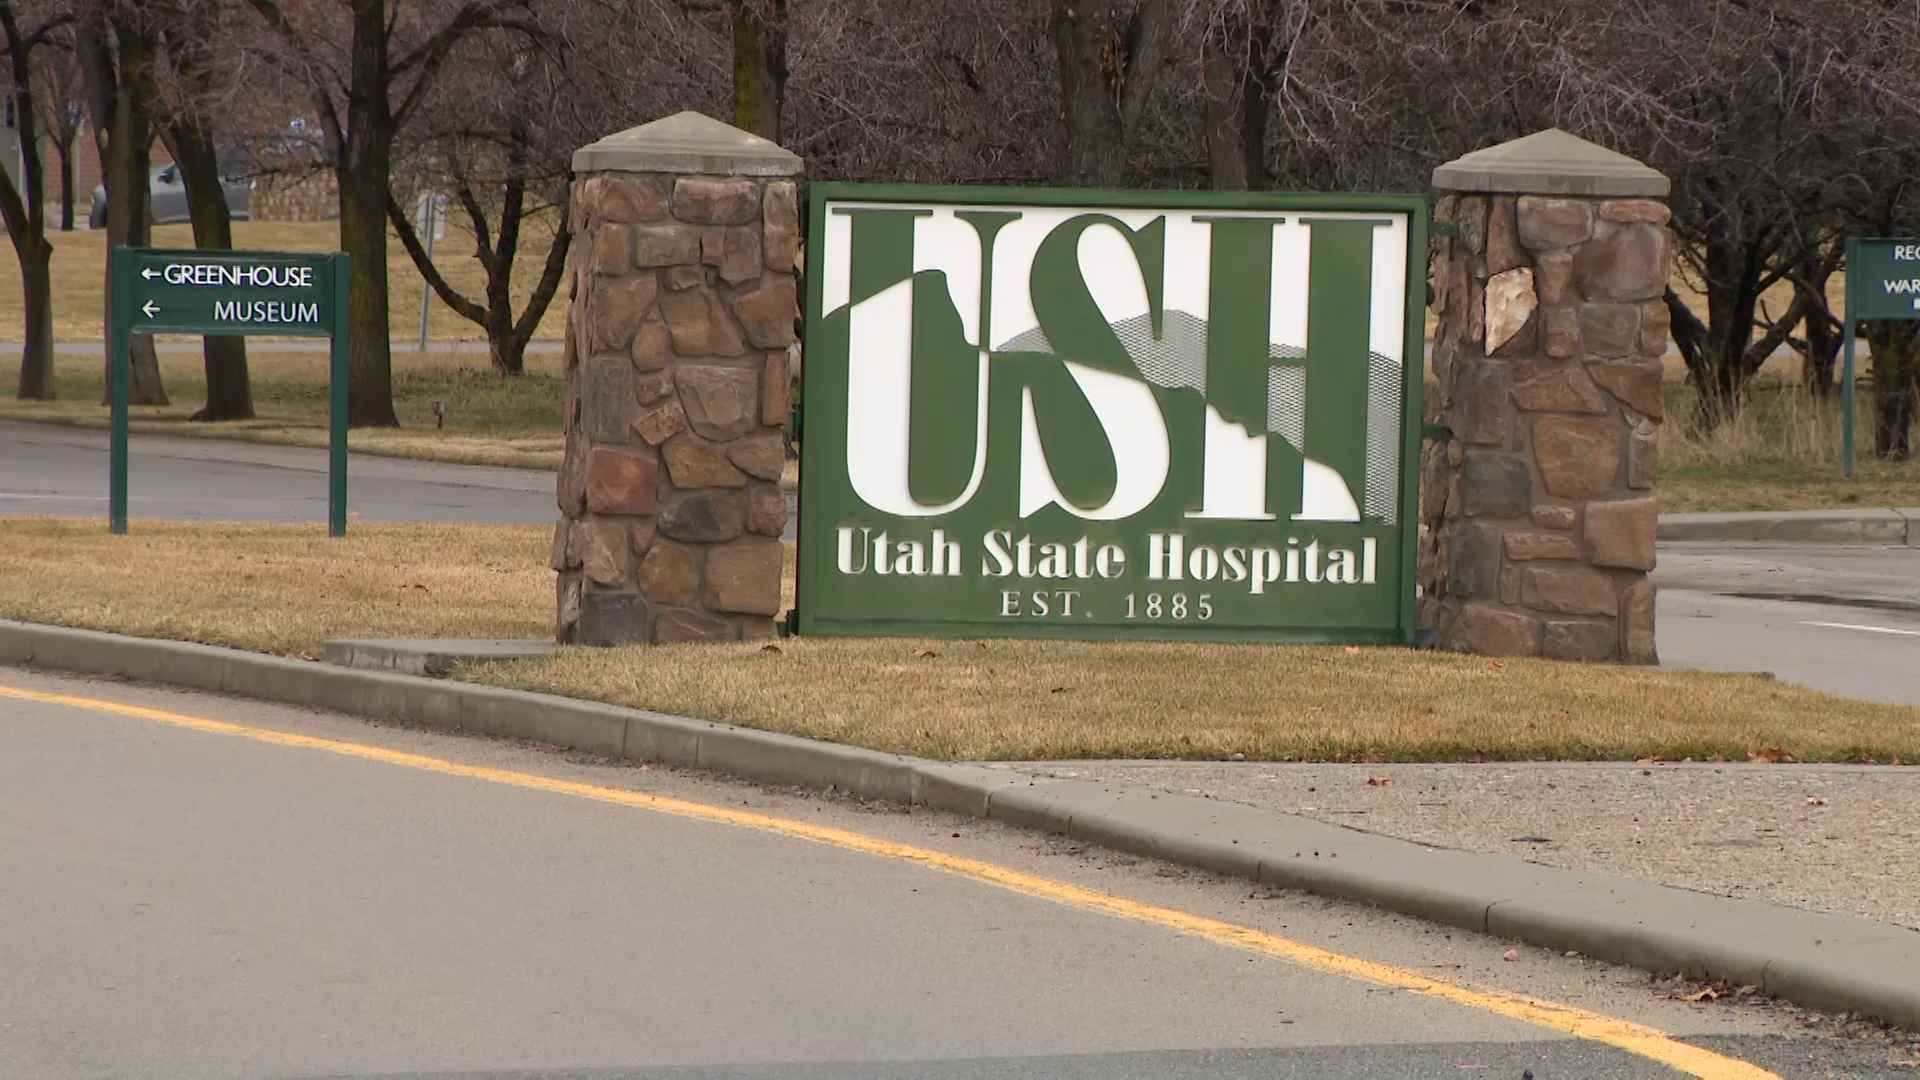 The Utah State Hospital sign in Provo, Utah....